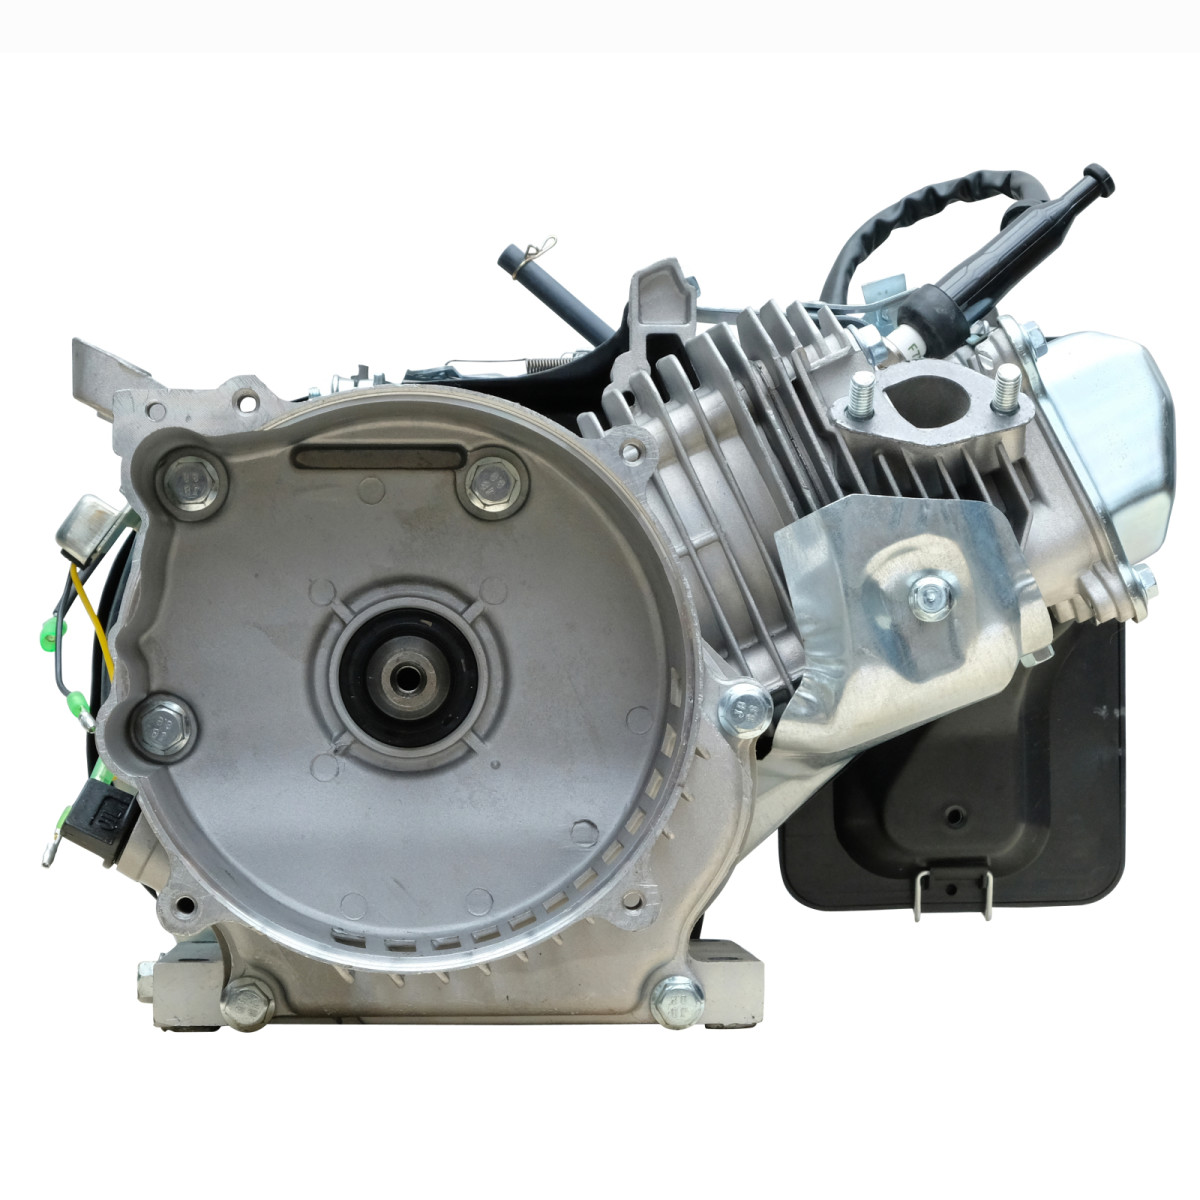 7 PS Benzin Motor für Stromerzeuger | Generatoren 3 kW